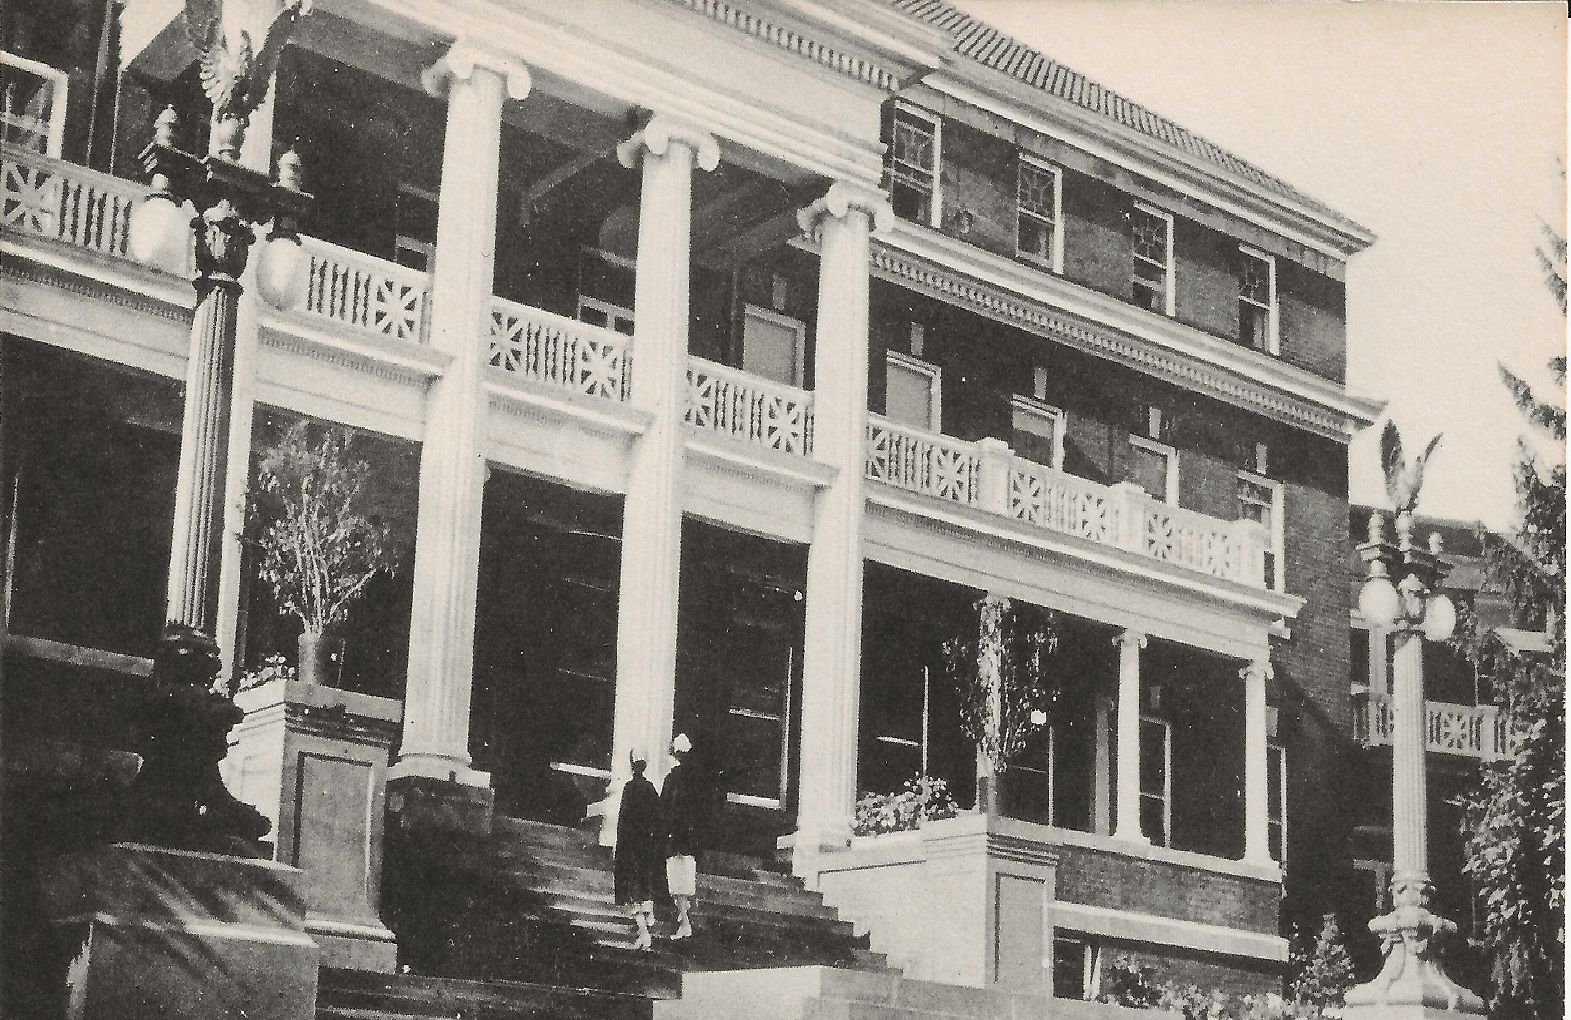 1940 Entrance